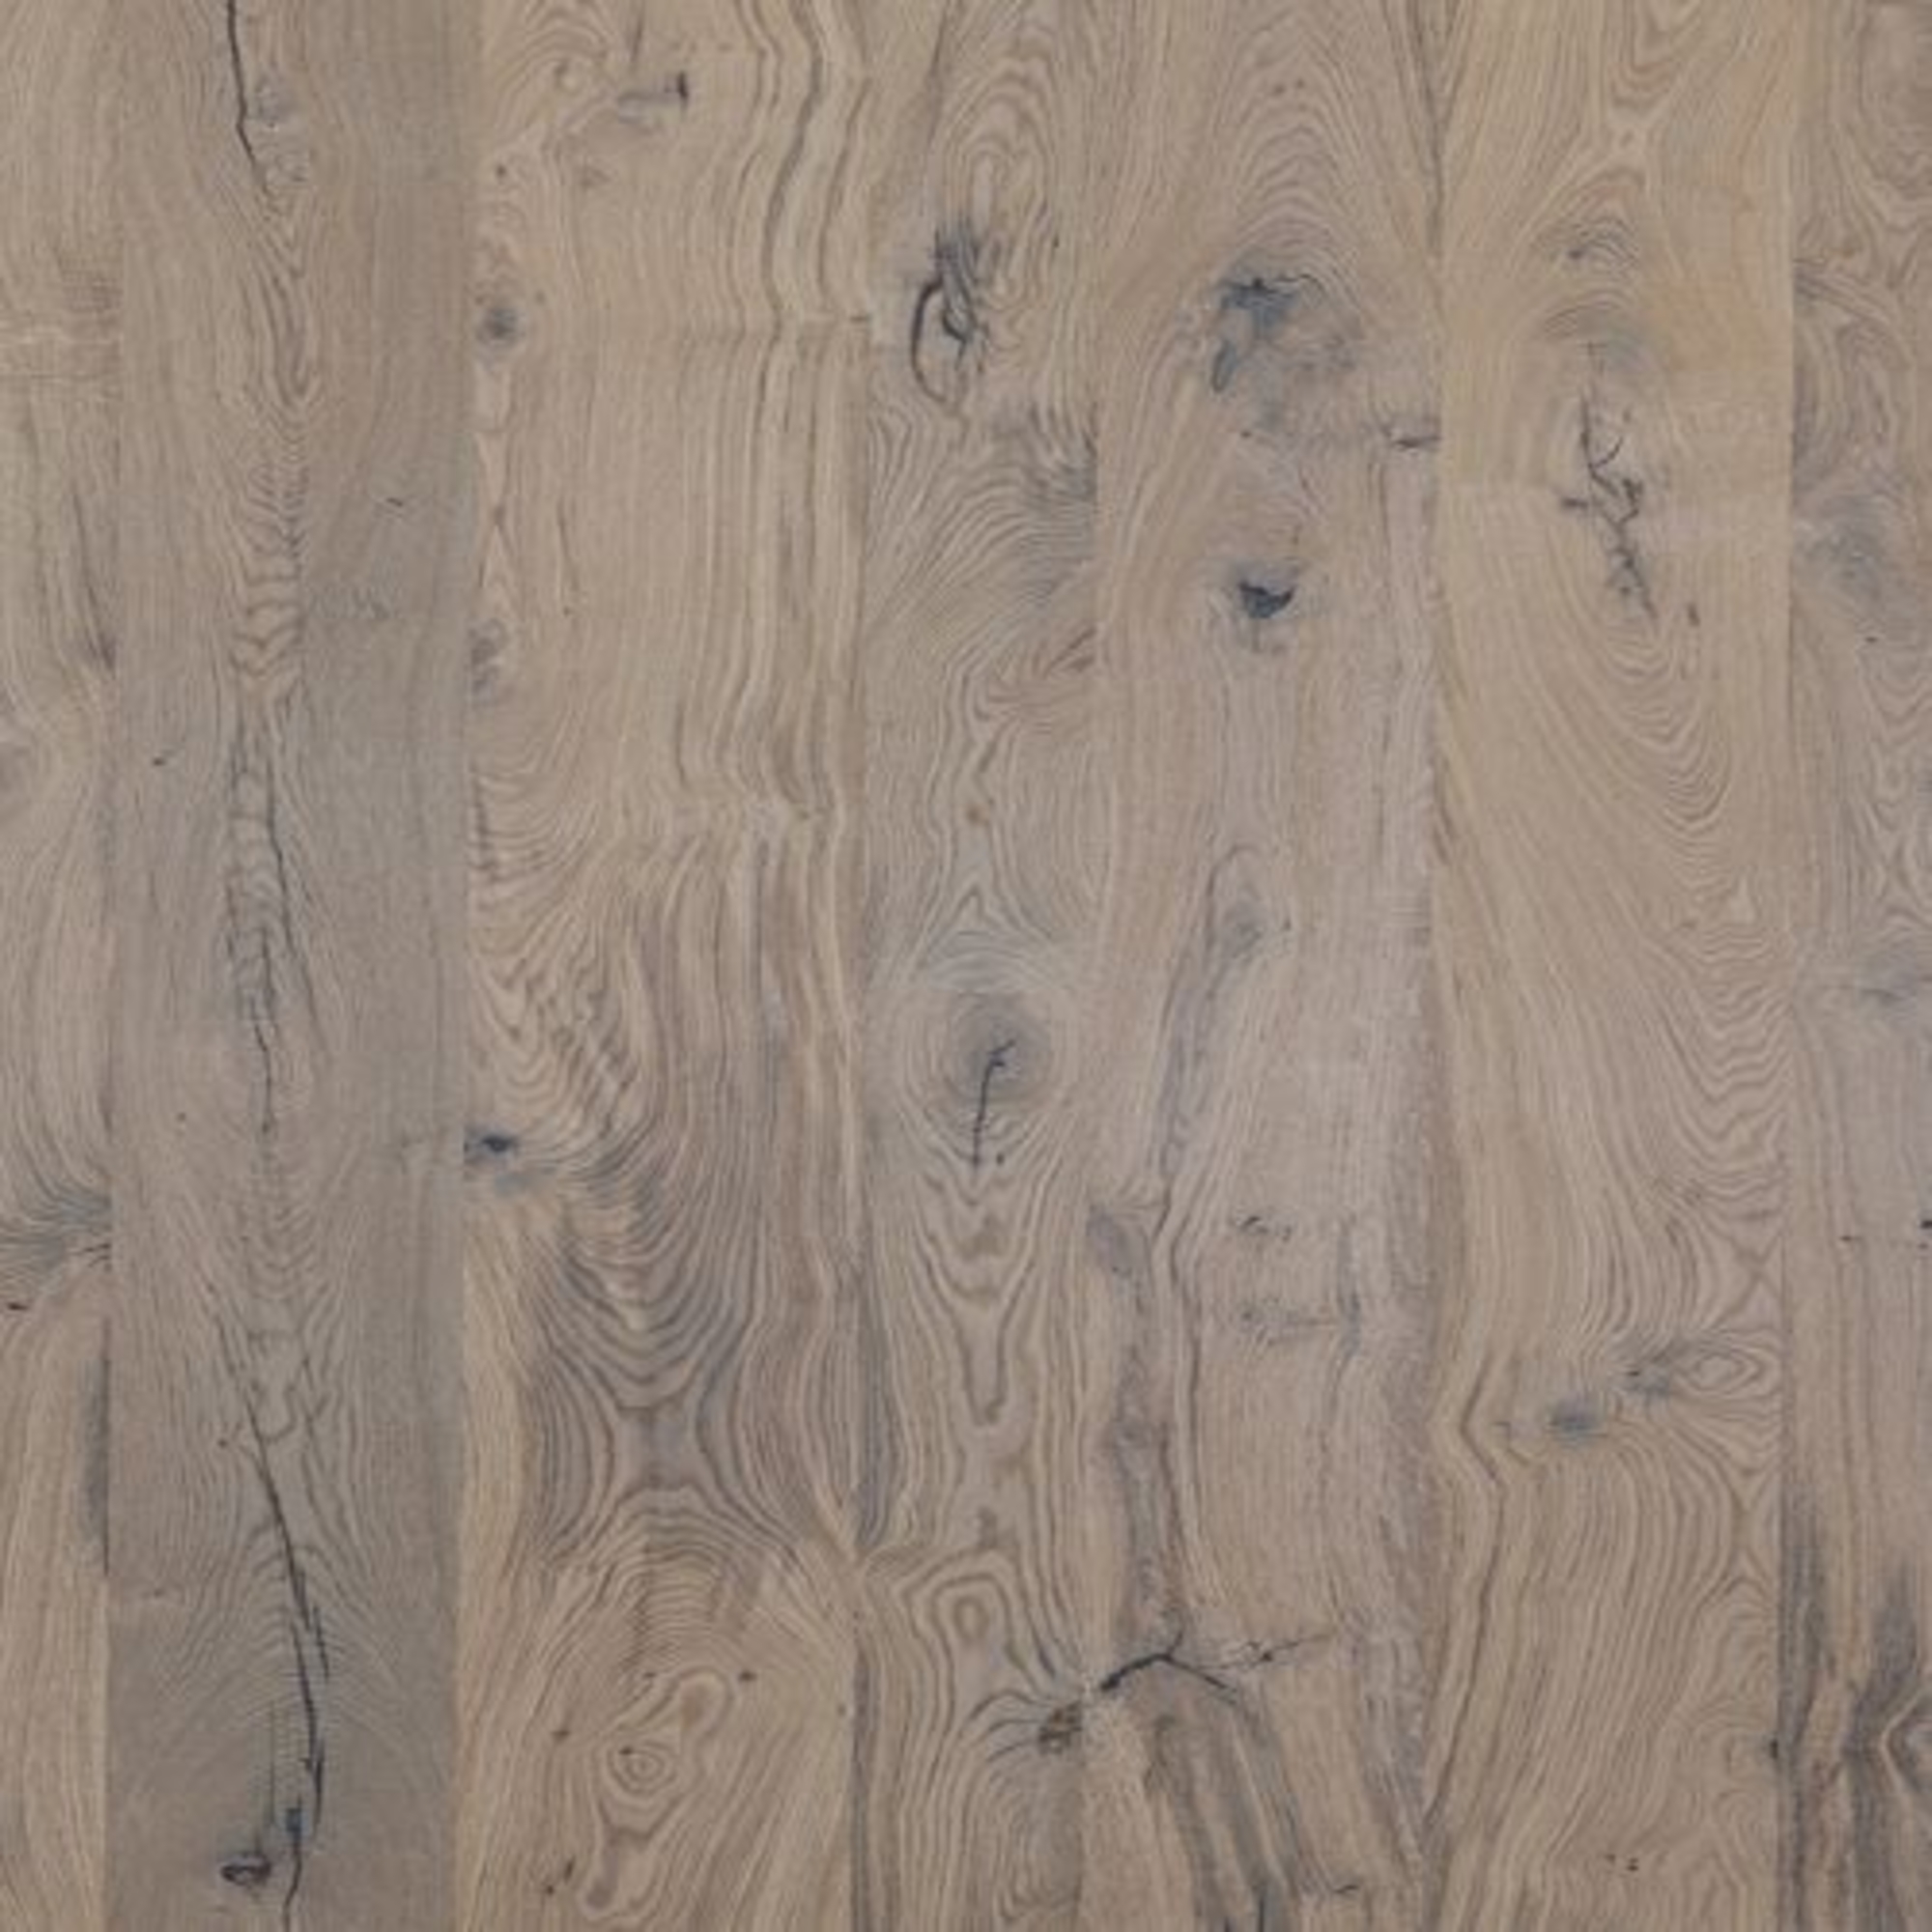 Sumán® Basalt European Oak Rustic Grade Plain Sliced Plank Matched Prefinished LosánNL Veneered Panel swatch